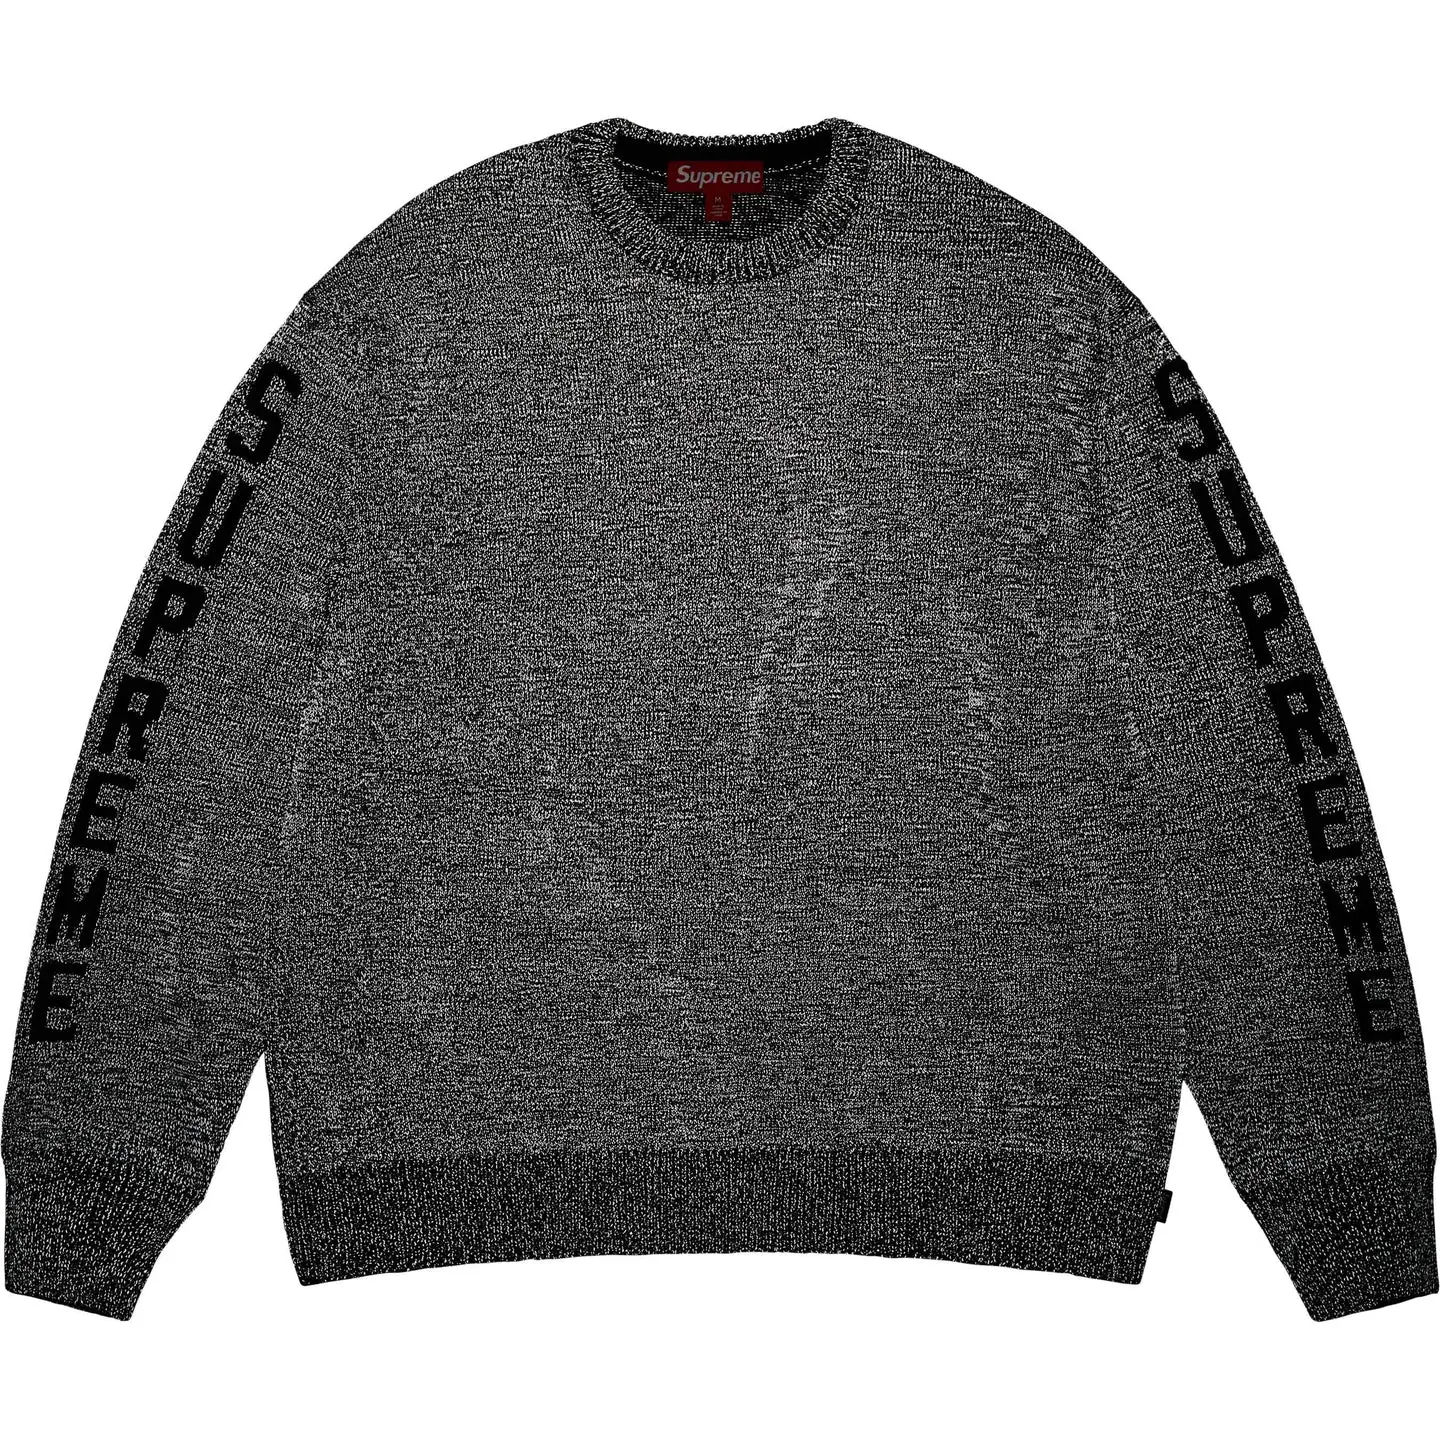 Reflective Sweater | Supreme 24ss